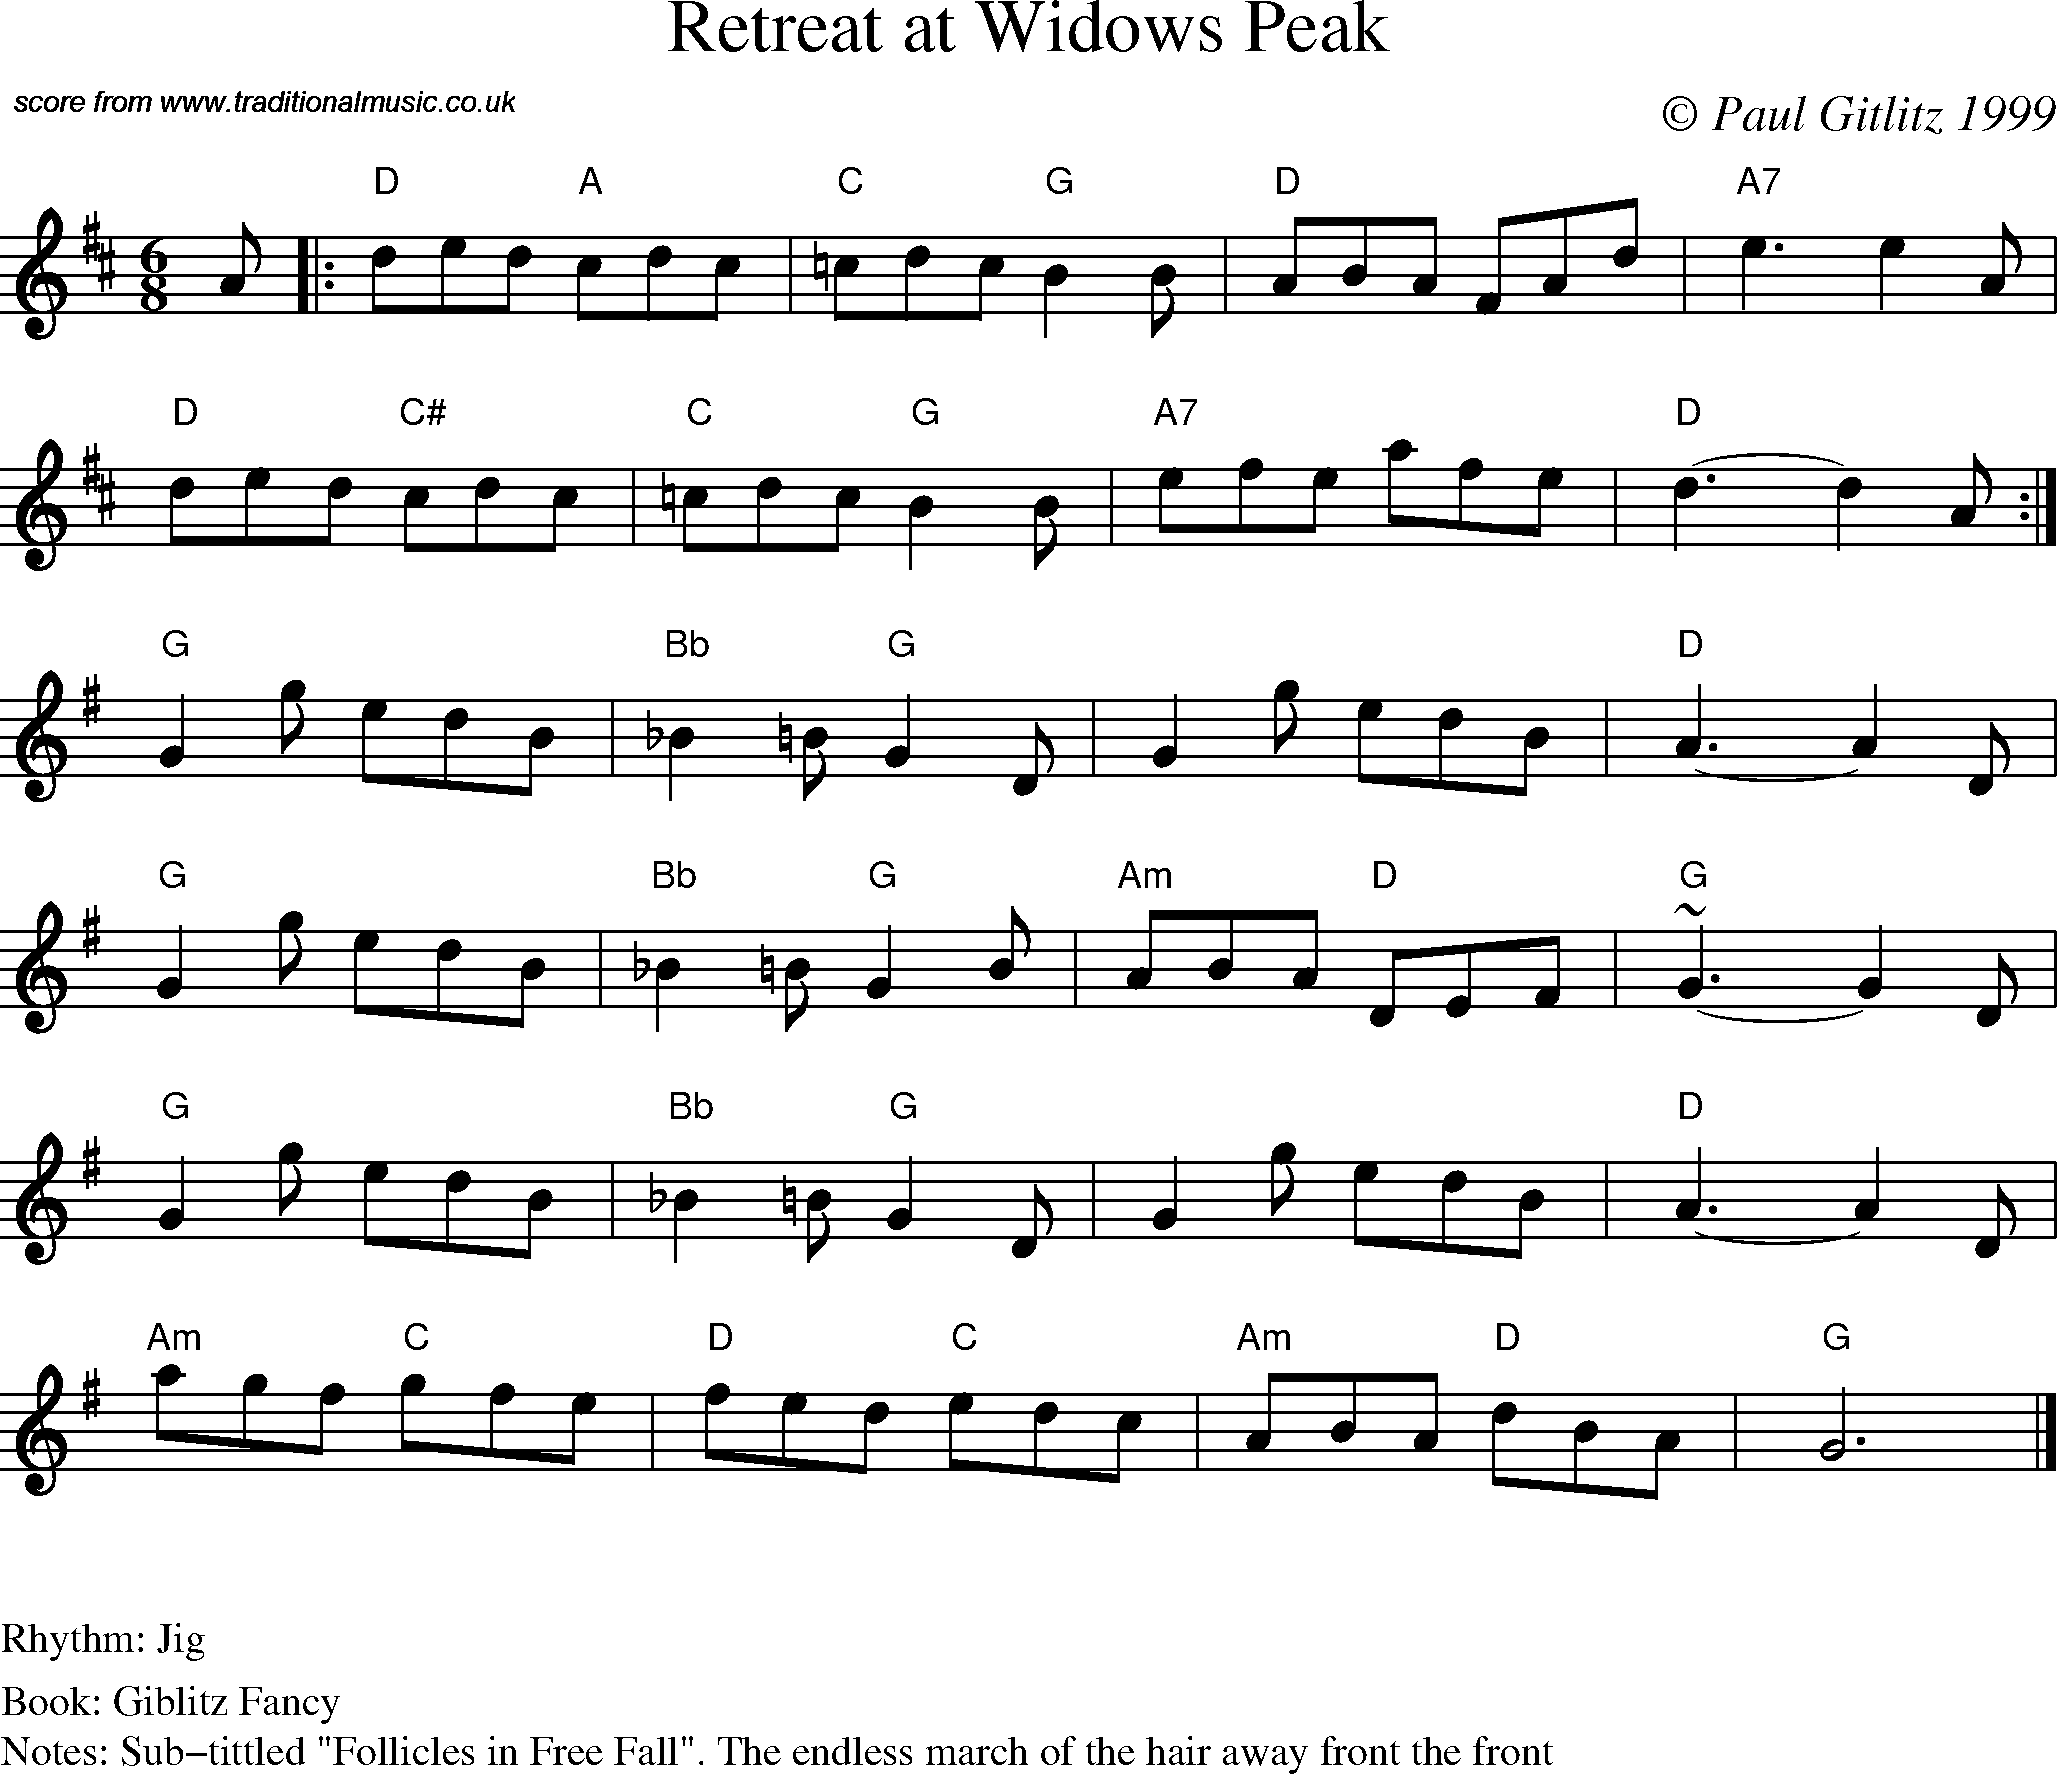 Sheet Music Score for Jig - Retreat at Widows Peak